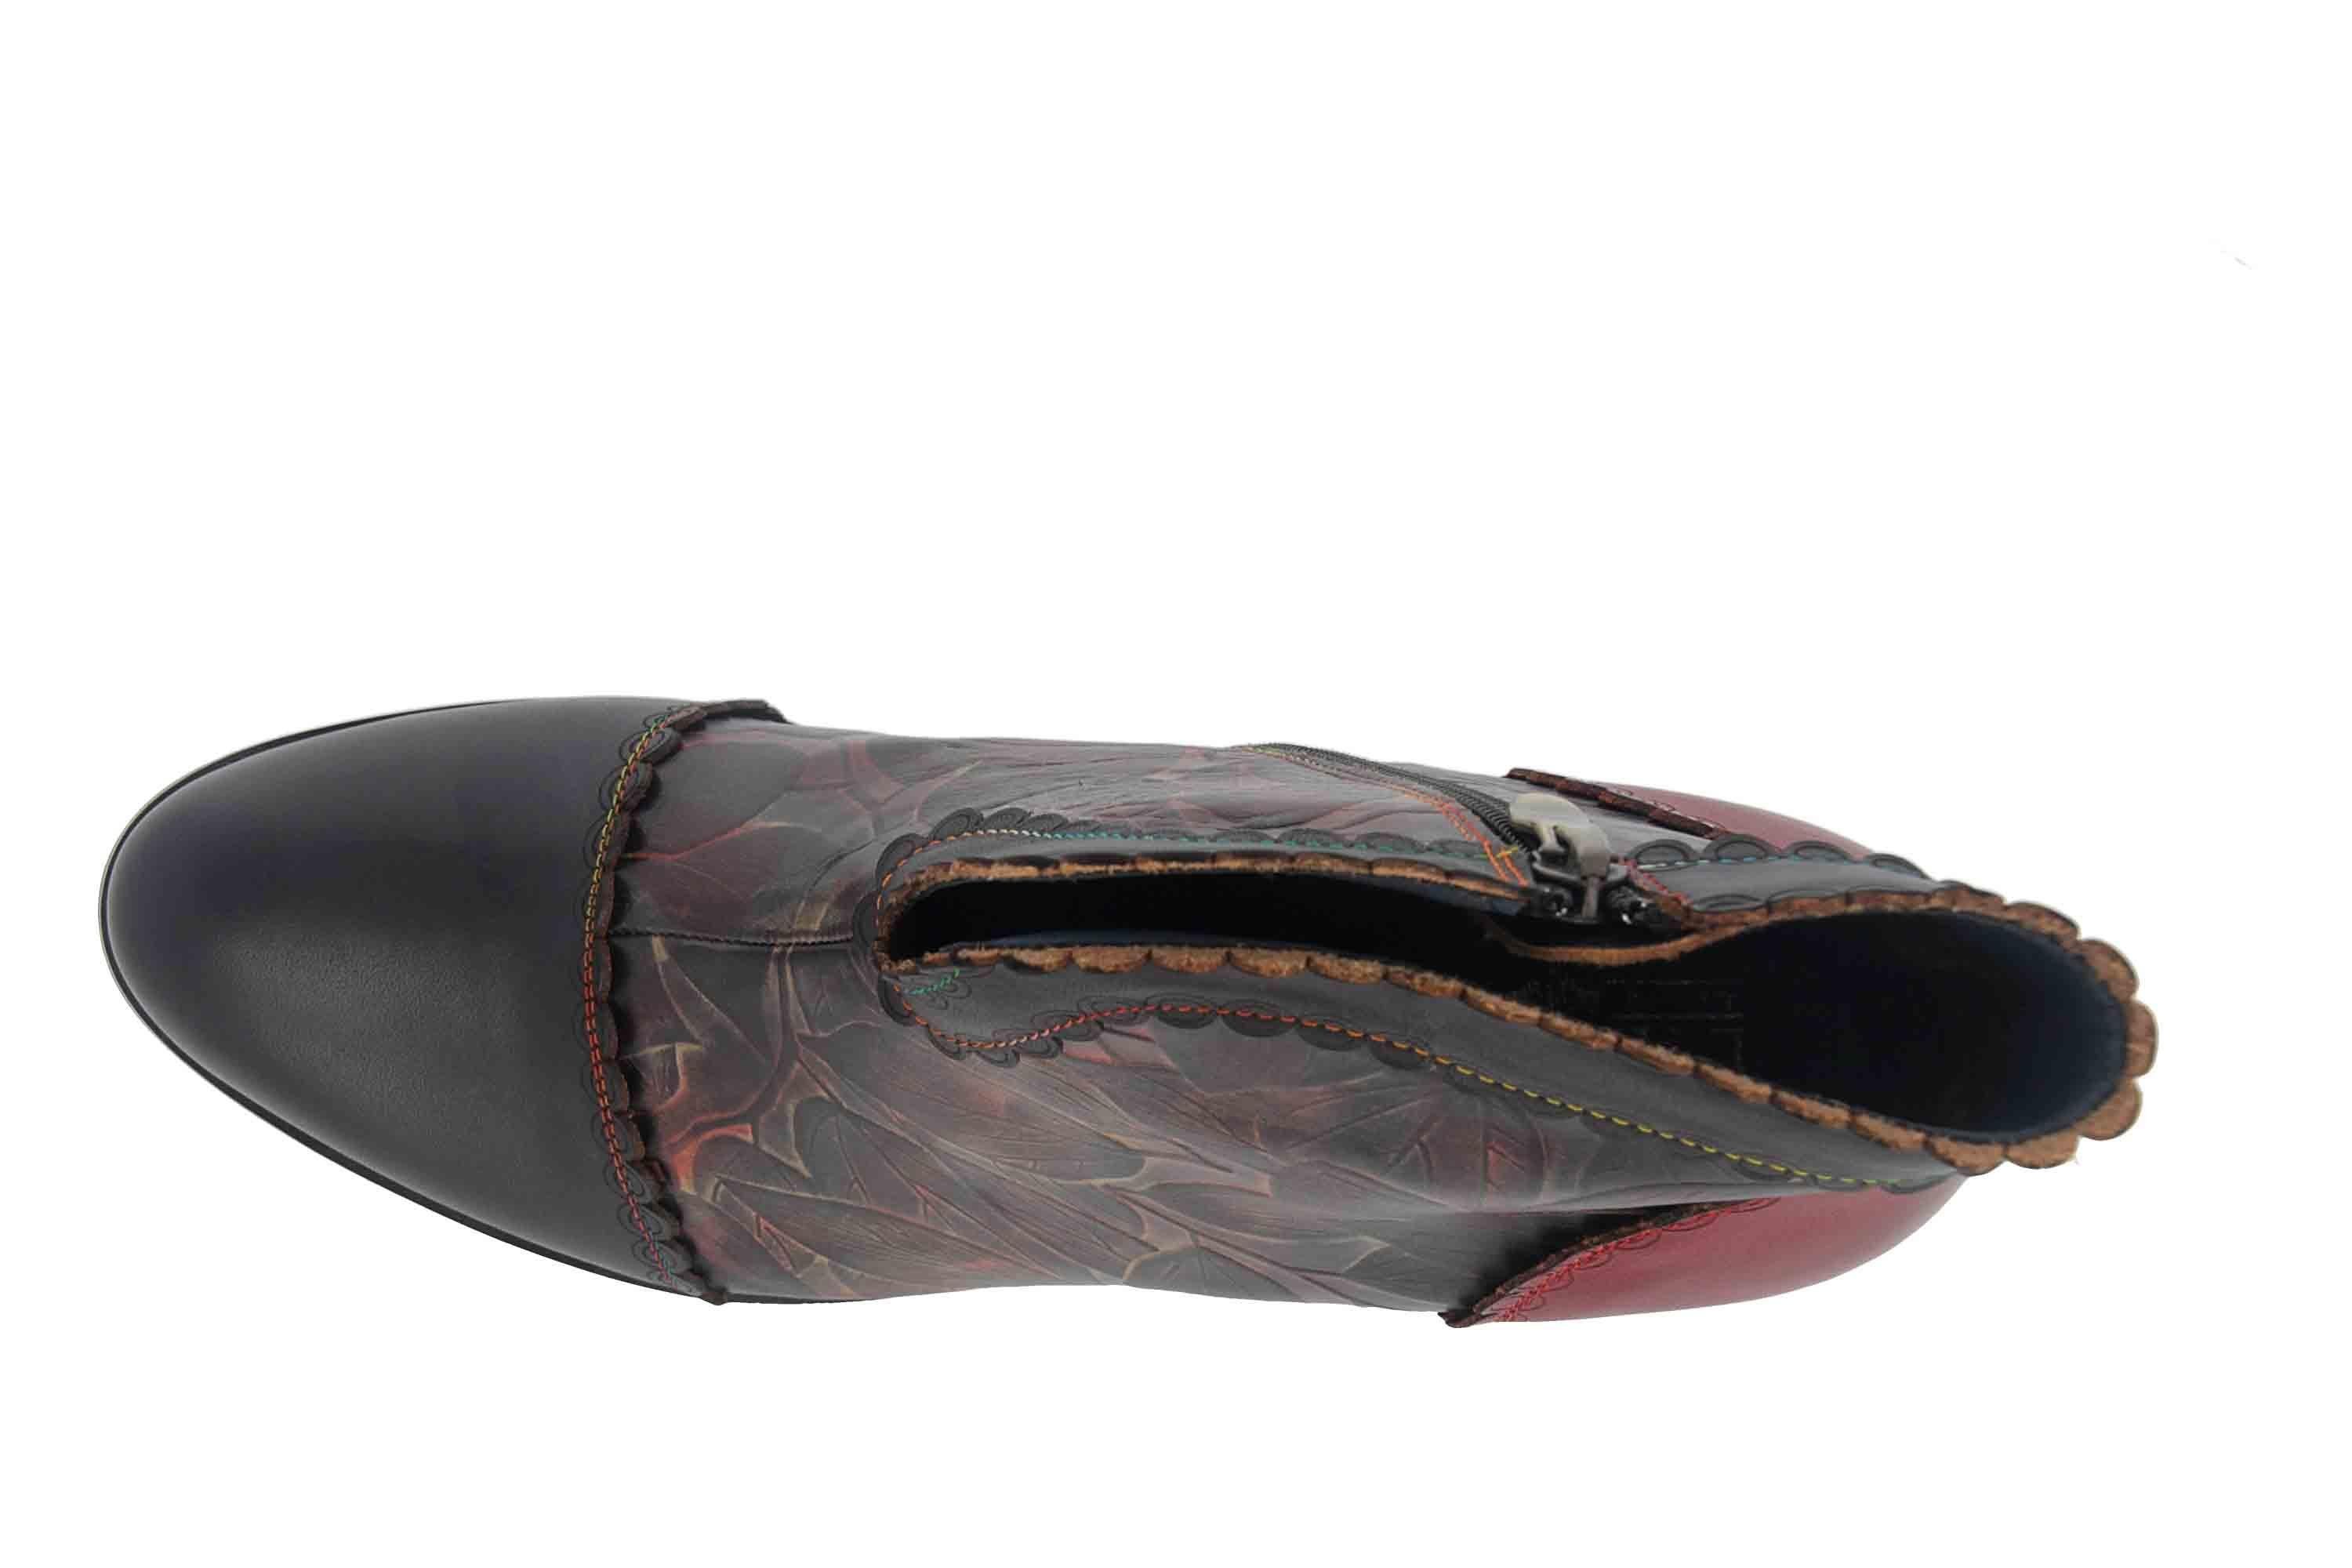 LEAFEEL-B Black Spring Stiefel Step Leather